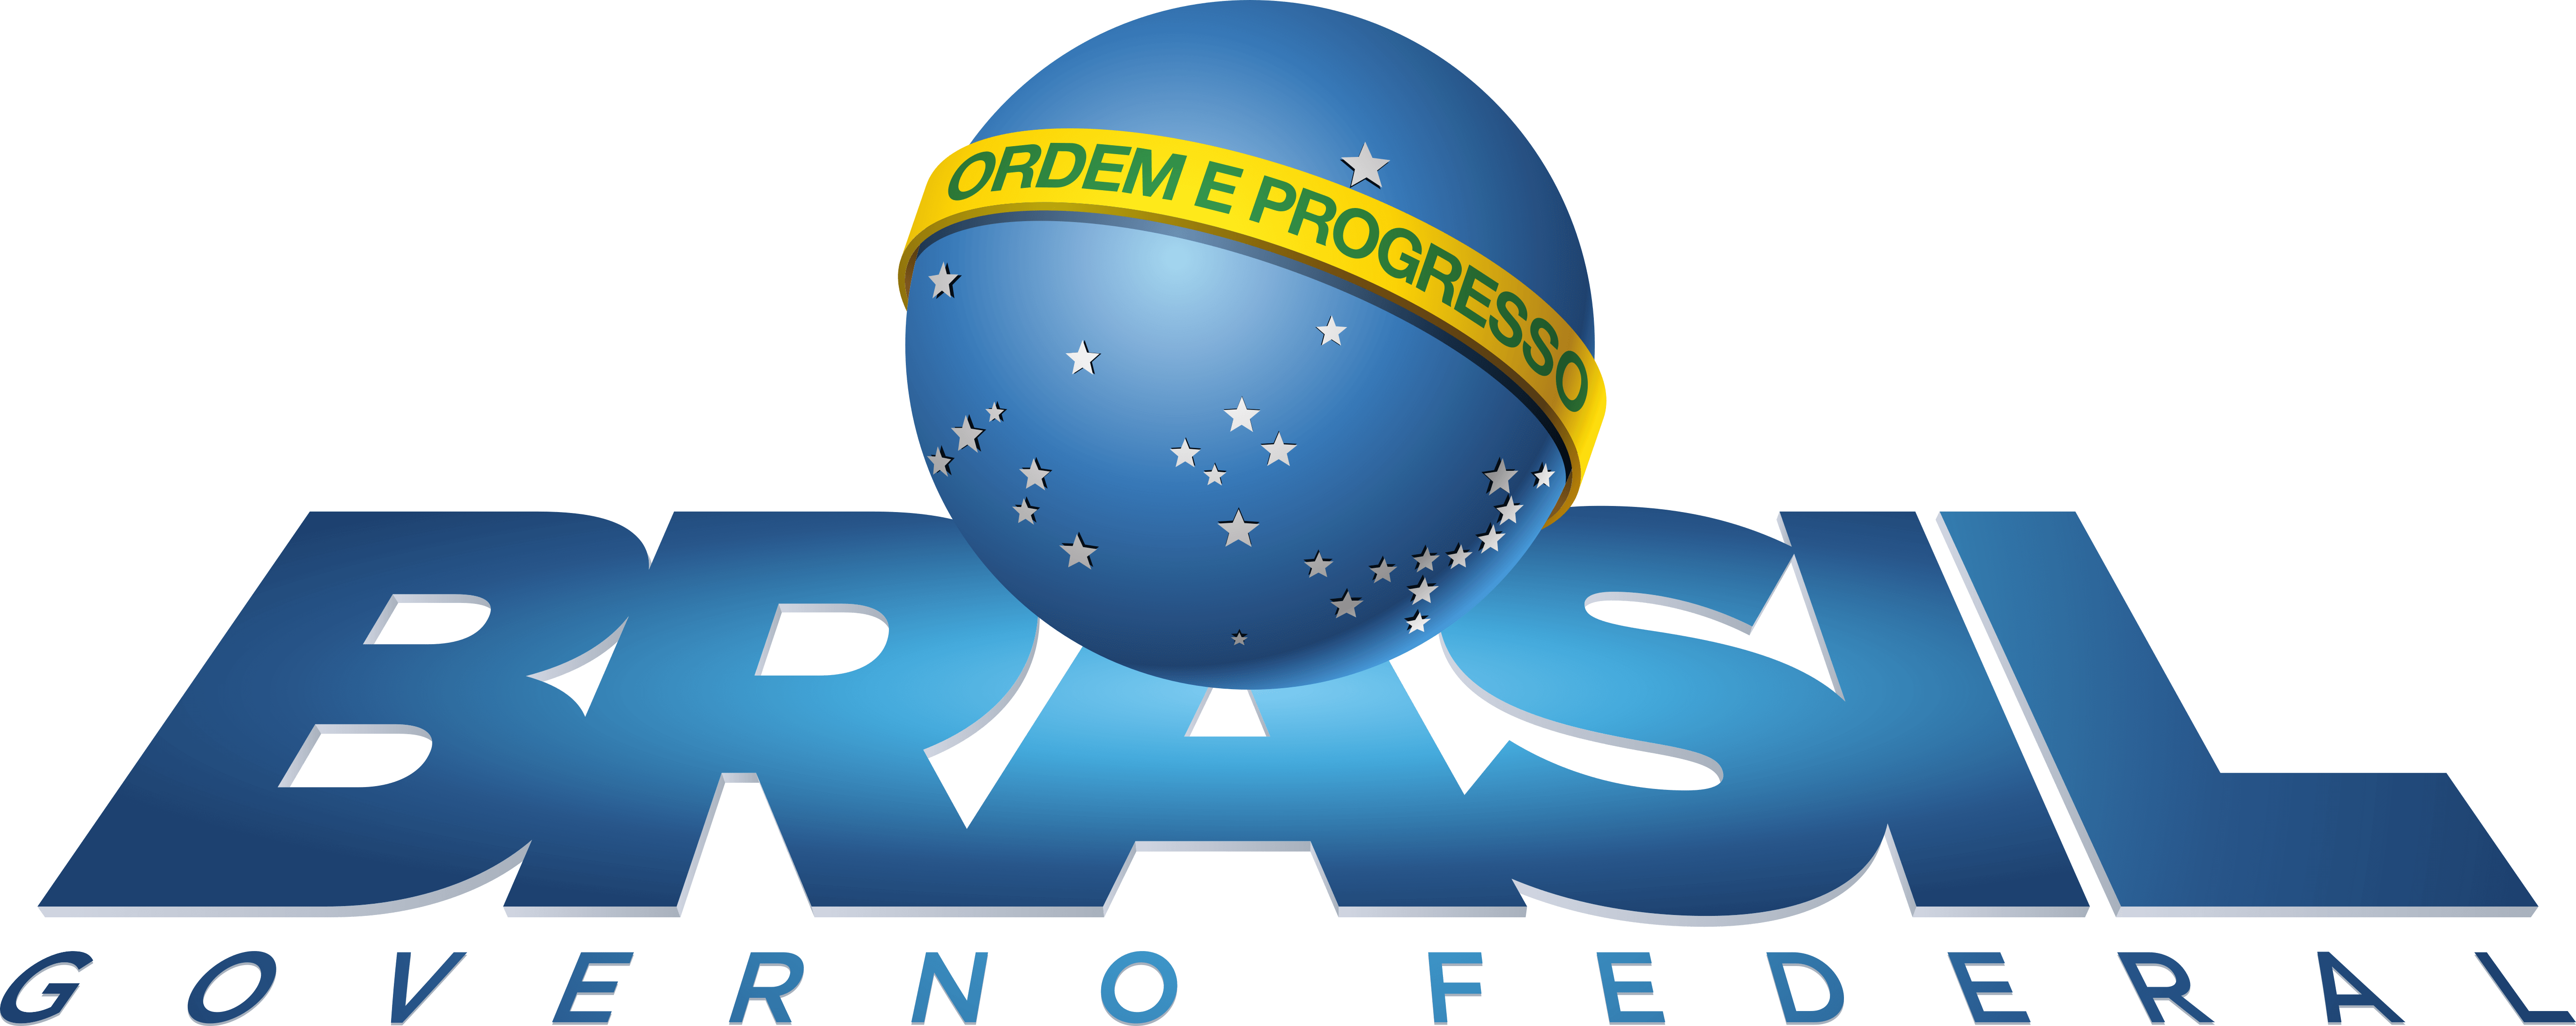 Logo do Brasil